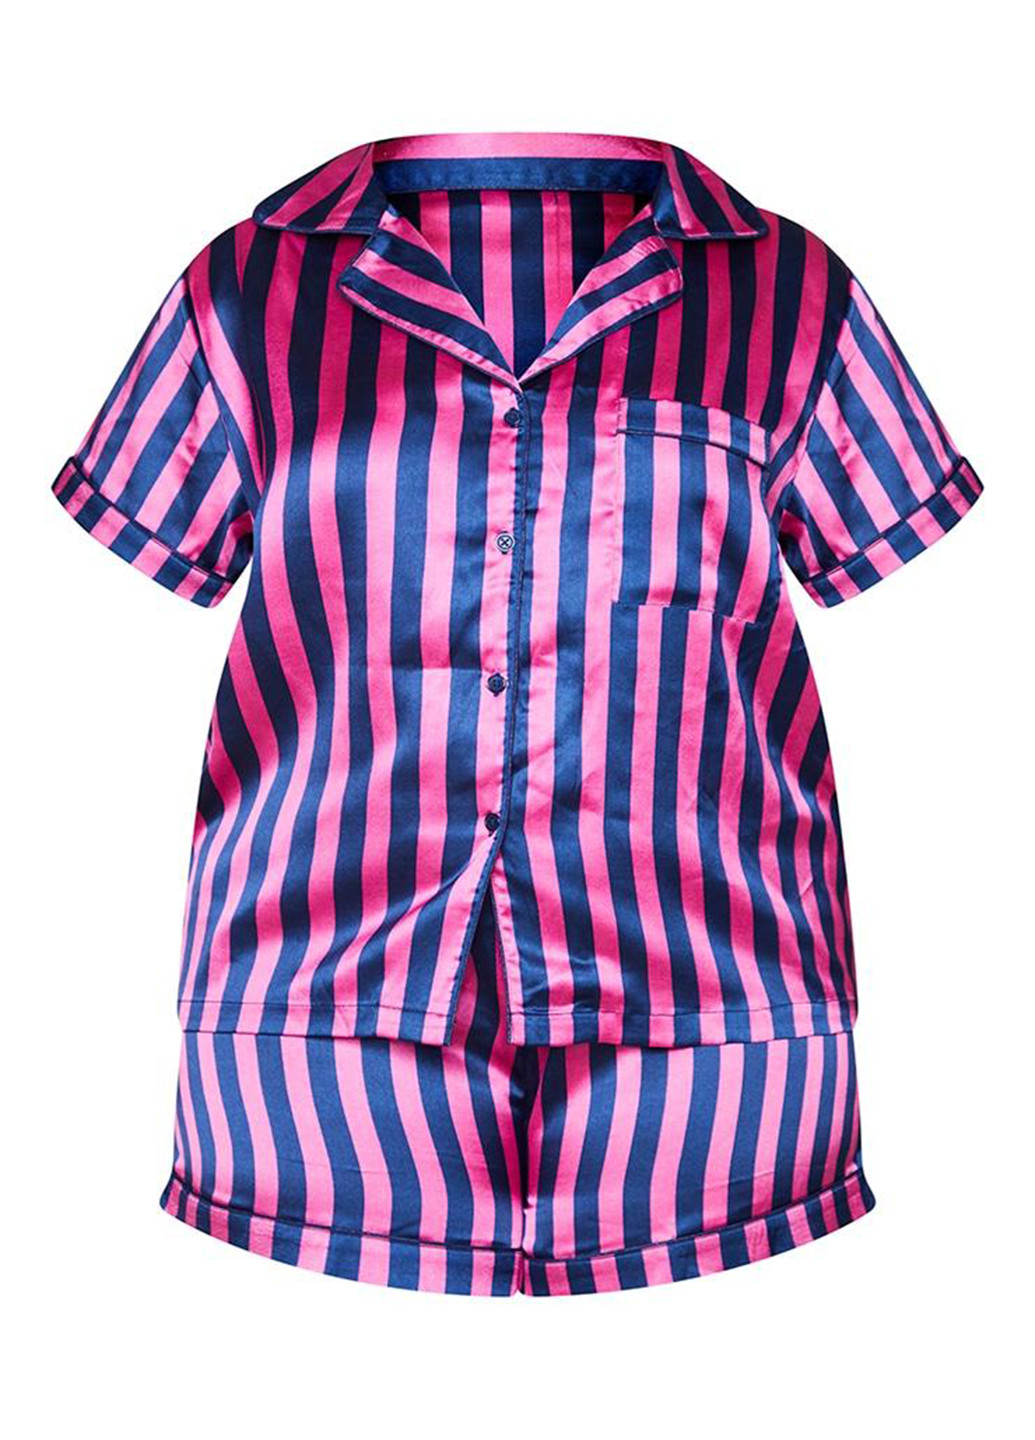 Комбинированная всесезон пижама (рубашка, шорты) рубашка + шорты PrettyLittleThing